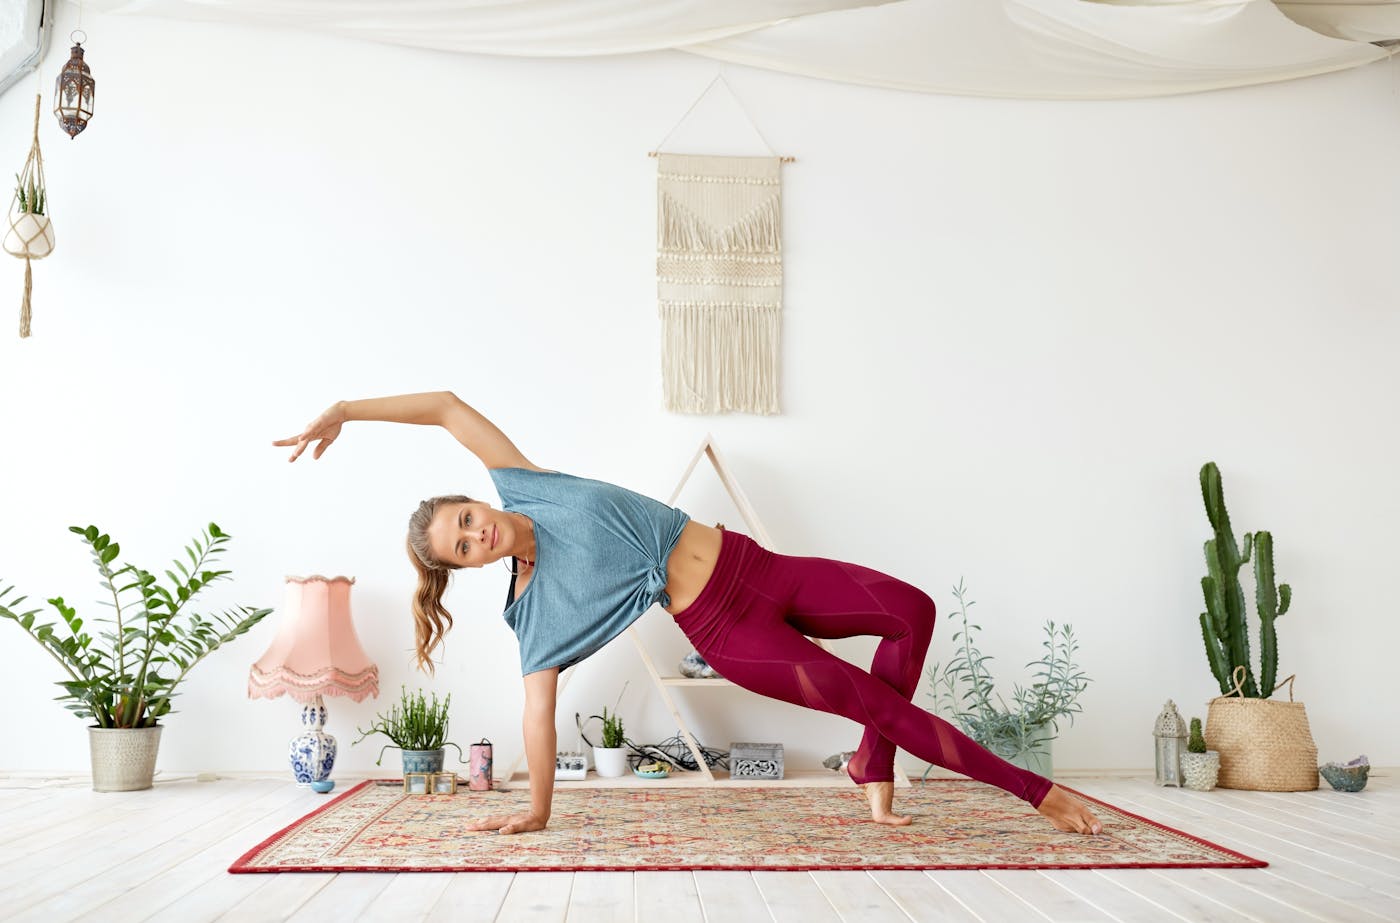 Junge fitte Frau praktiziert Yoga auf buntem Teppich in hellem Studio